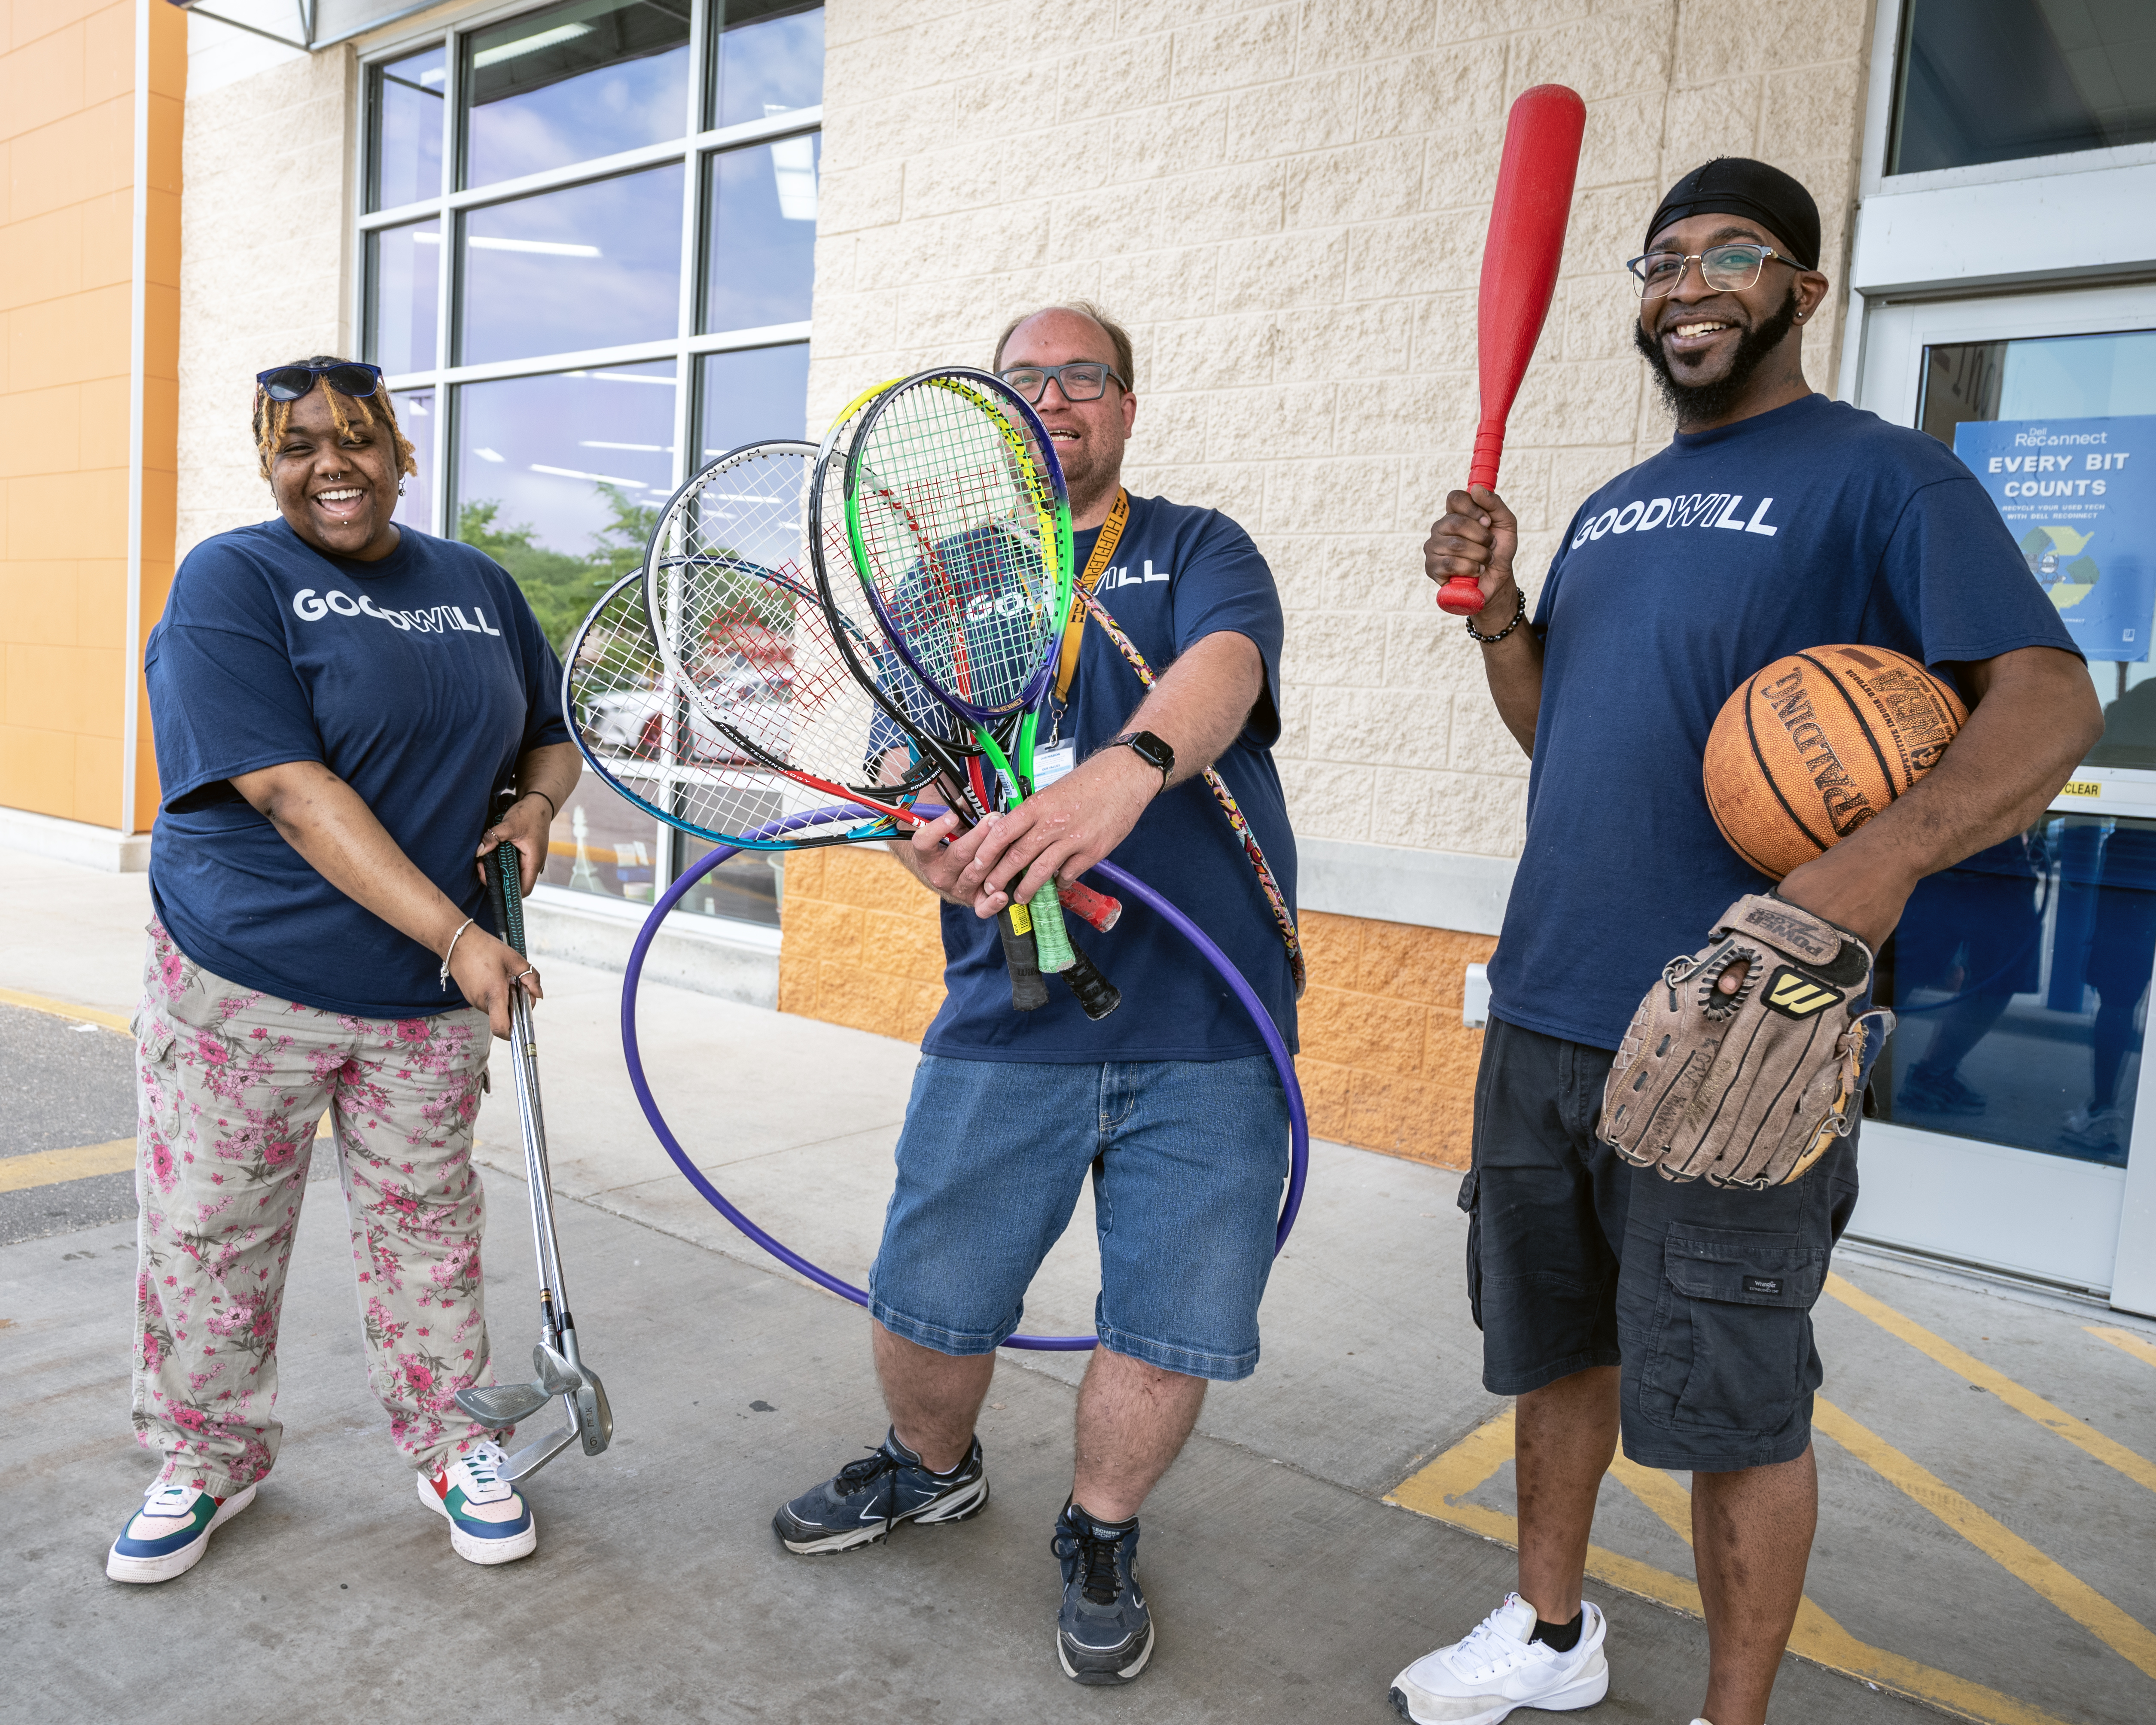 image of Goodwill South Central Wisconsin staff holding outdoor gear: golf clubs, tennis rackets, hula hoop, baseball bat, basketball